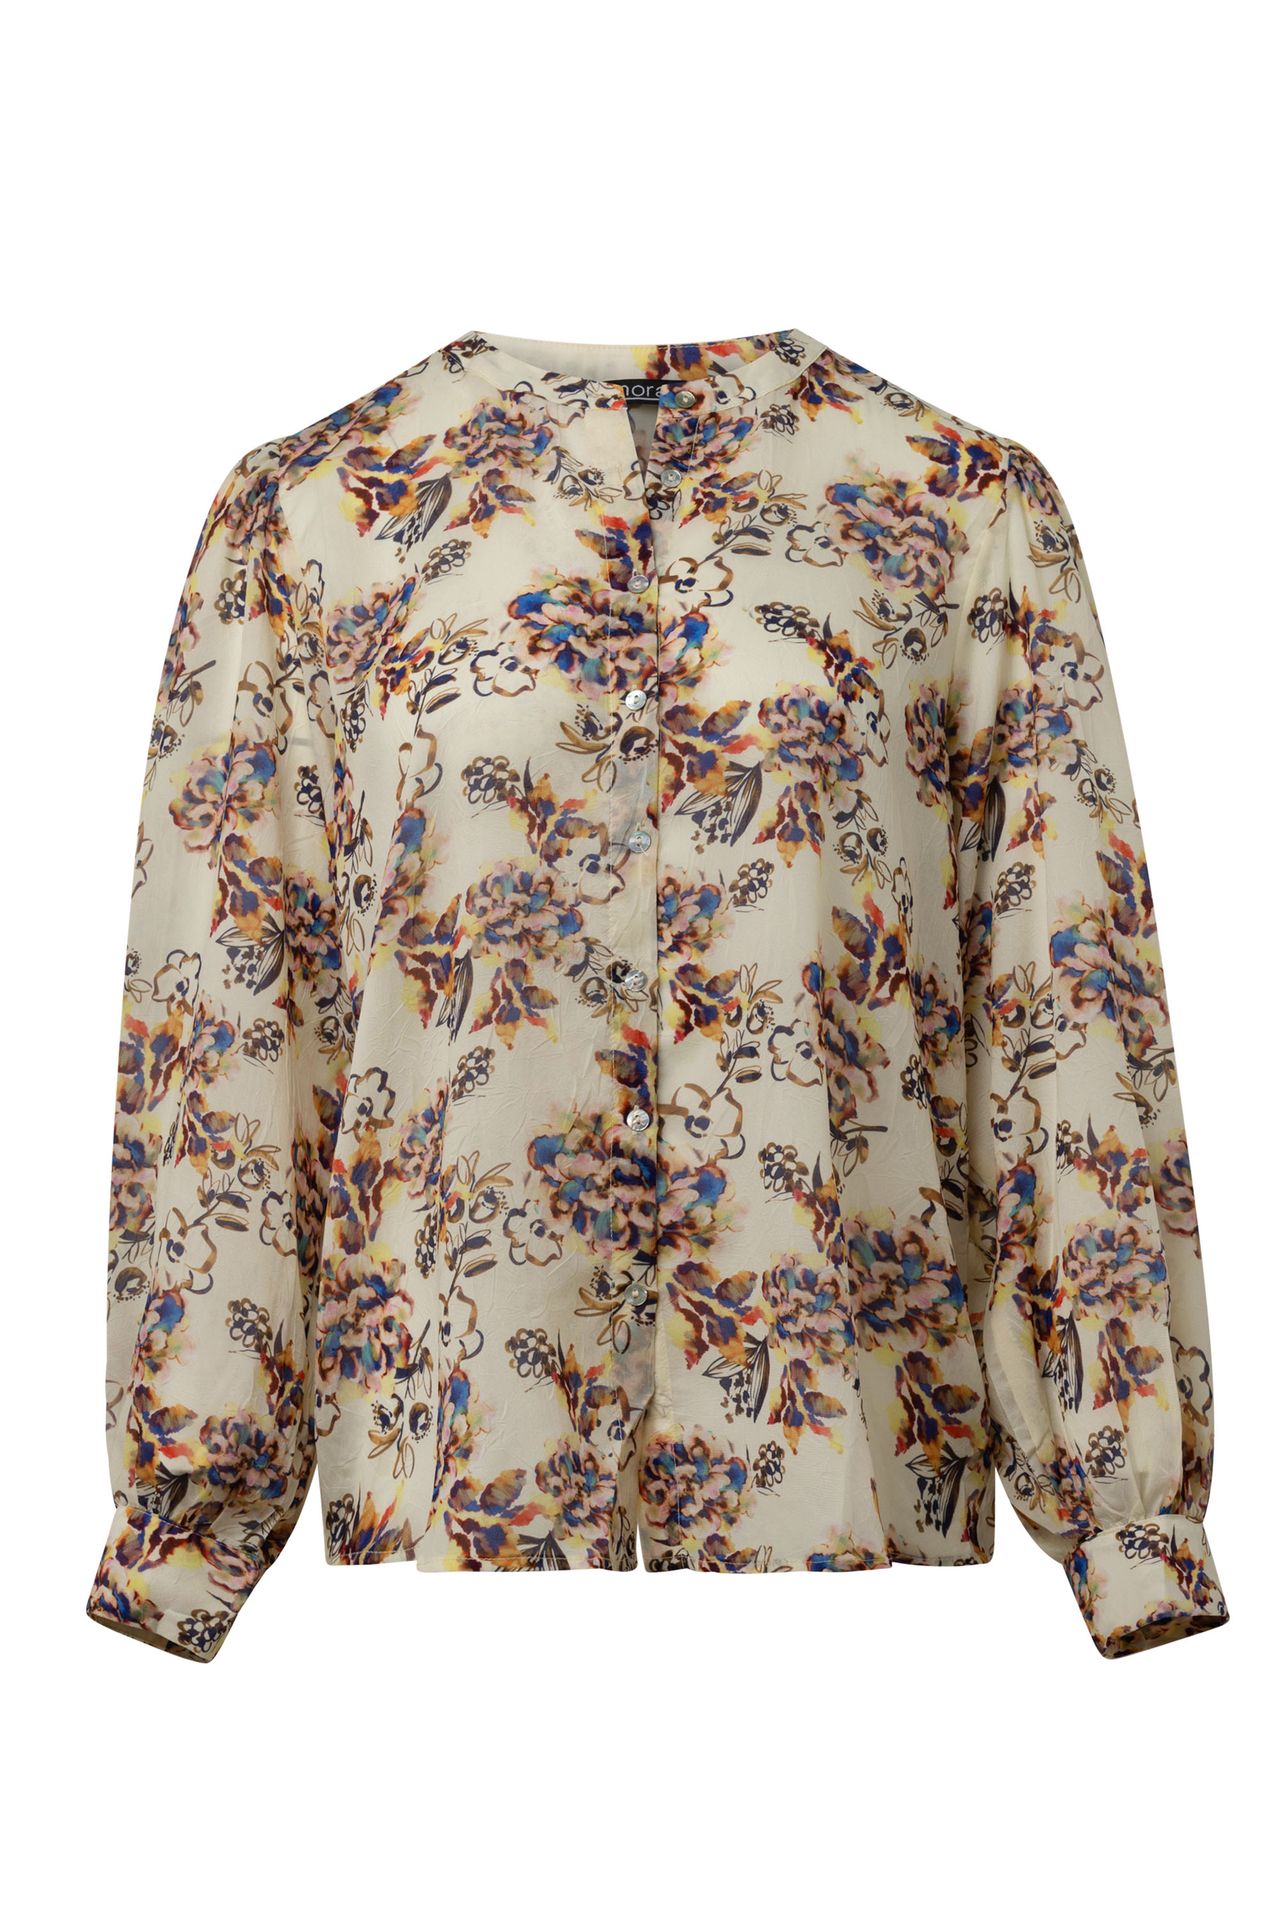  Meerkleurige blouse vanilla multicolor 214857-108-34